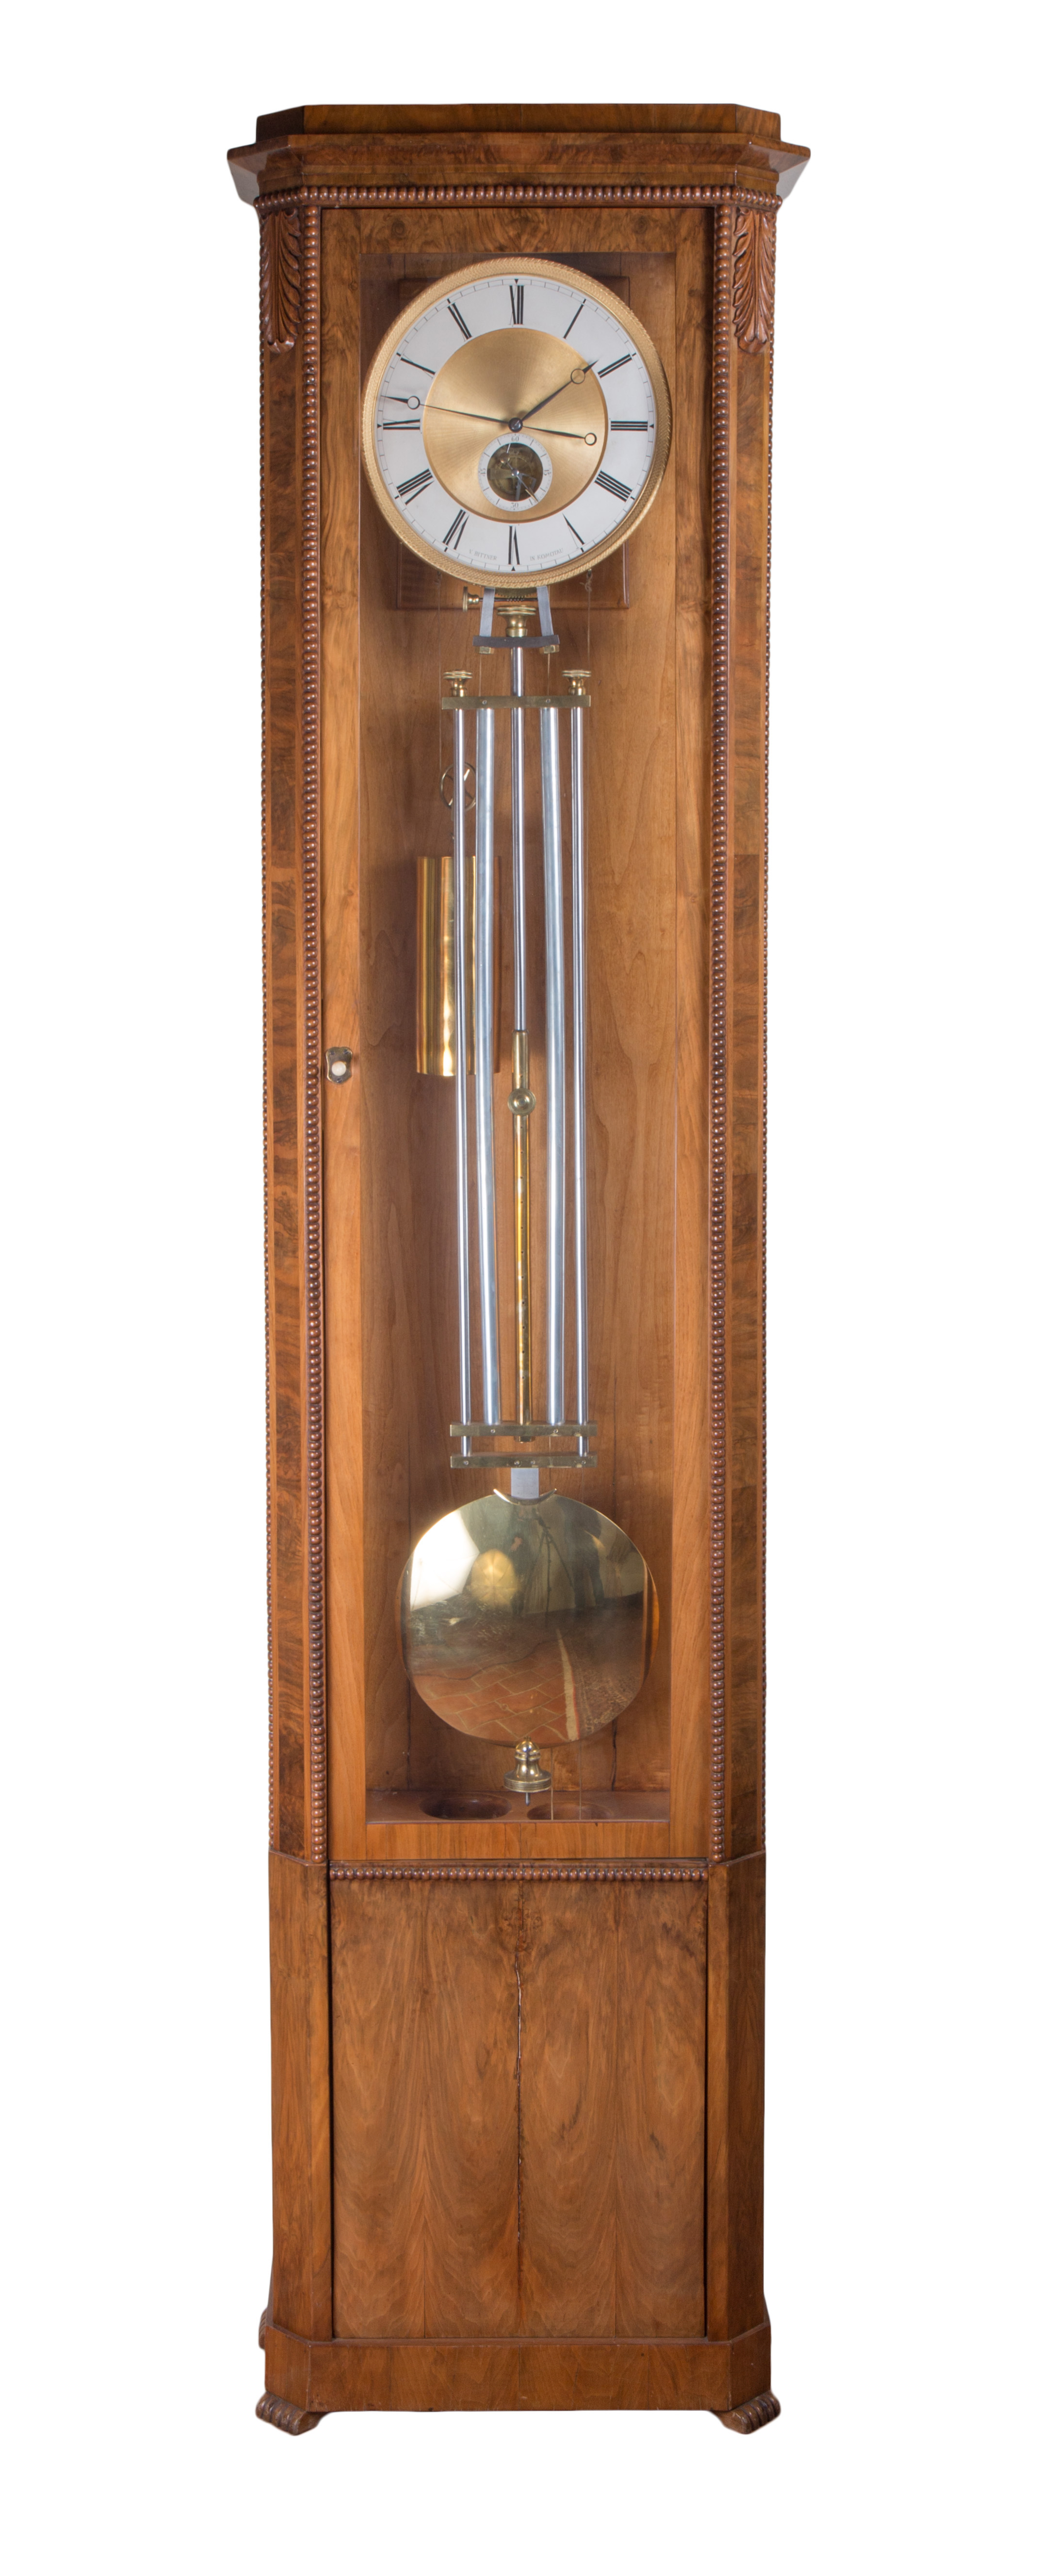 Longgase clock by Vinzenz Bittner with 1 year duration, c. 1845.